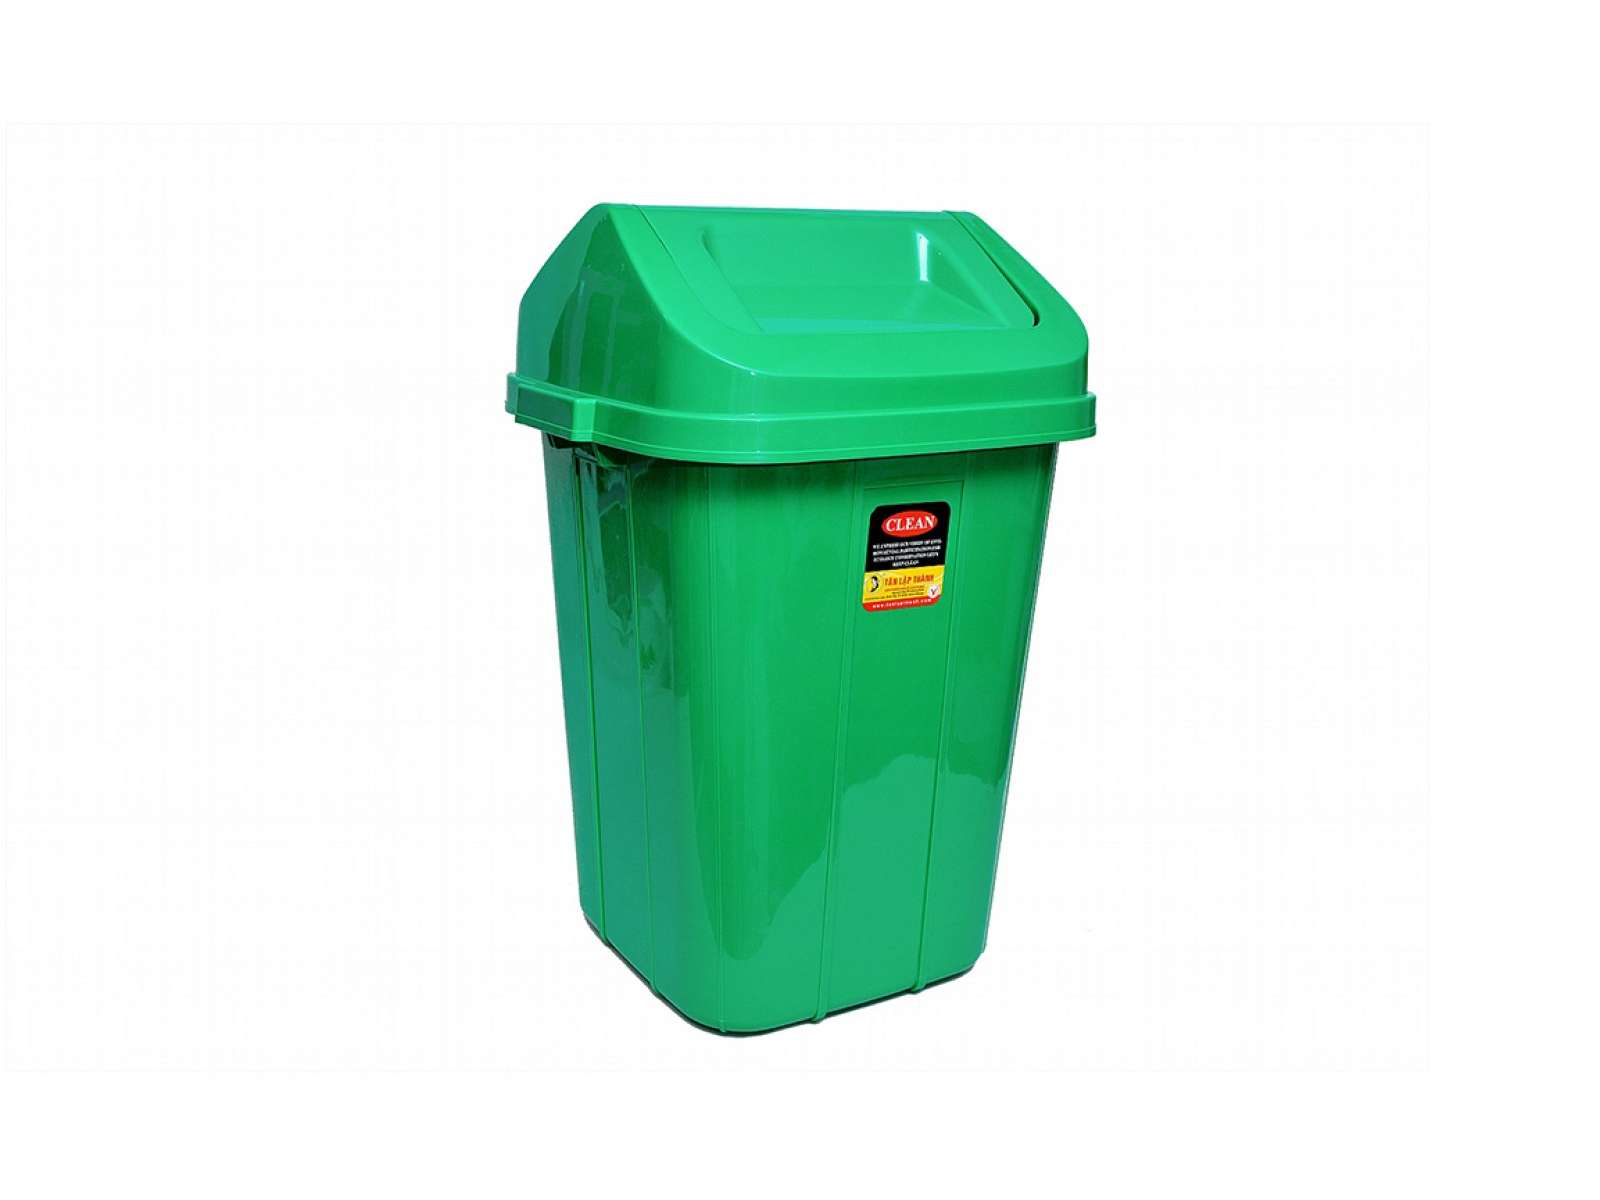 Waste Bin with swing lid - Large